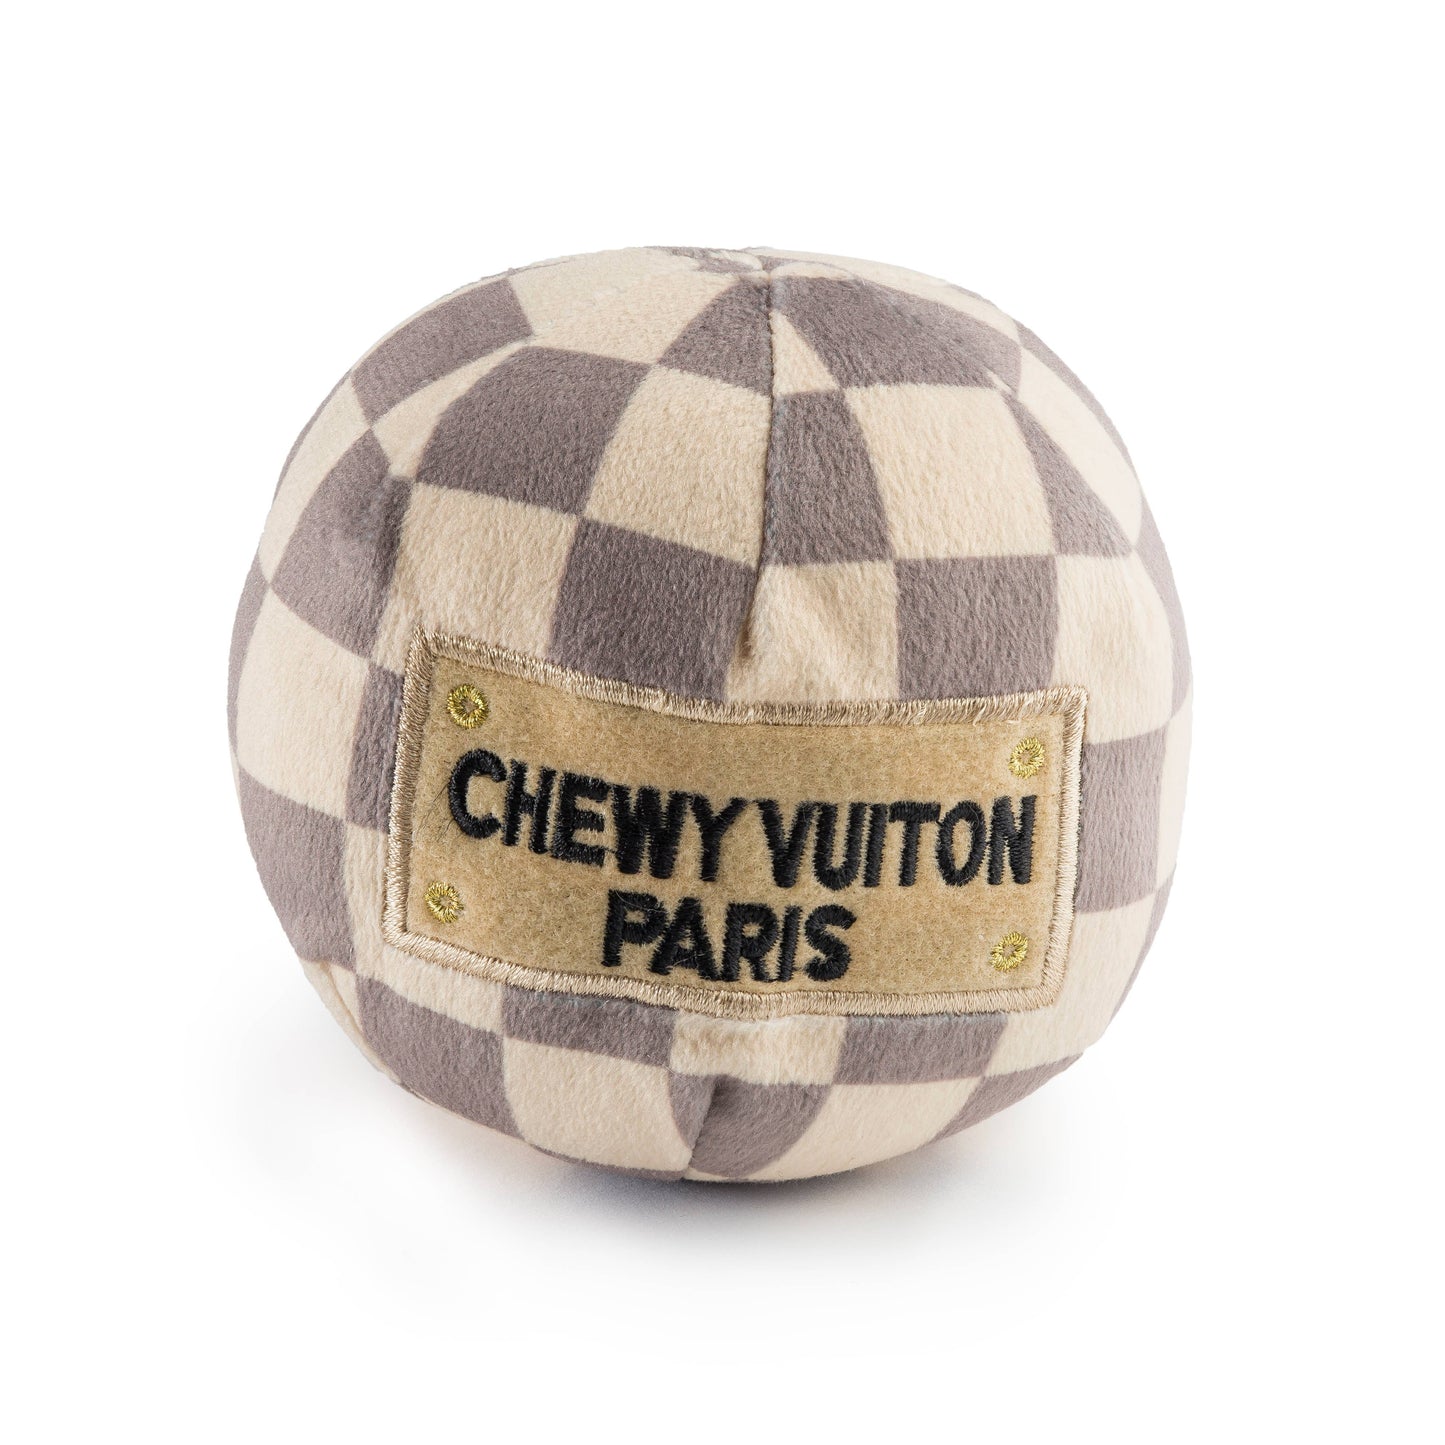 Checker Chewy Vuiton Ball Dog Toy